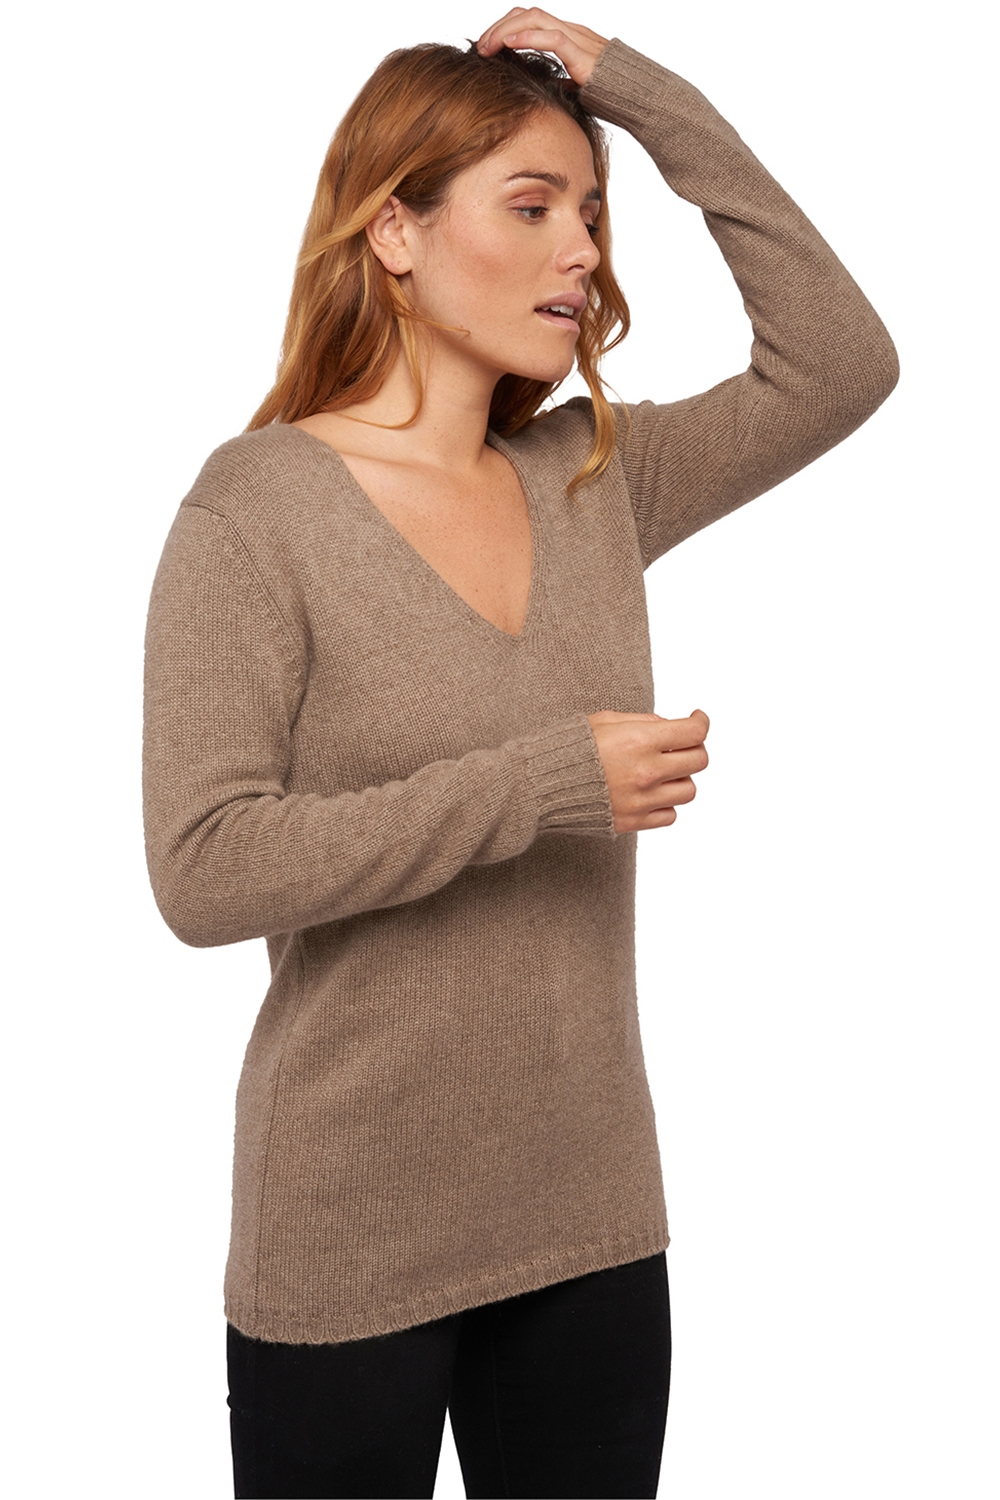  ladies chunky sweater natural vava natural brown m